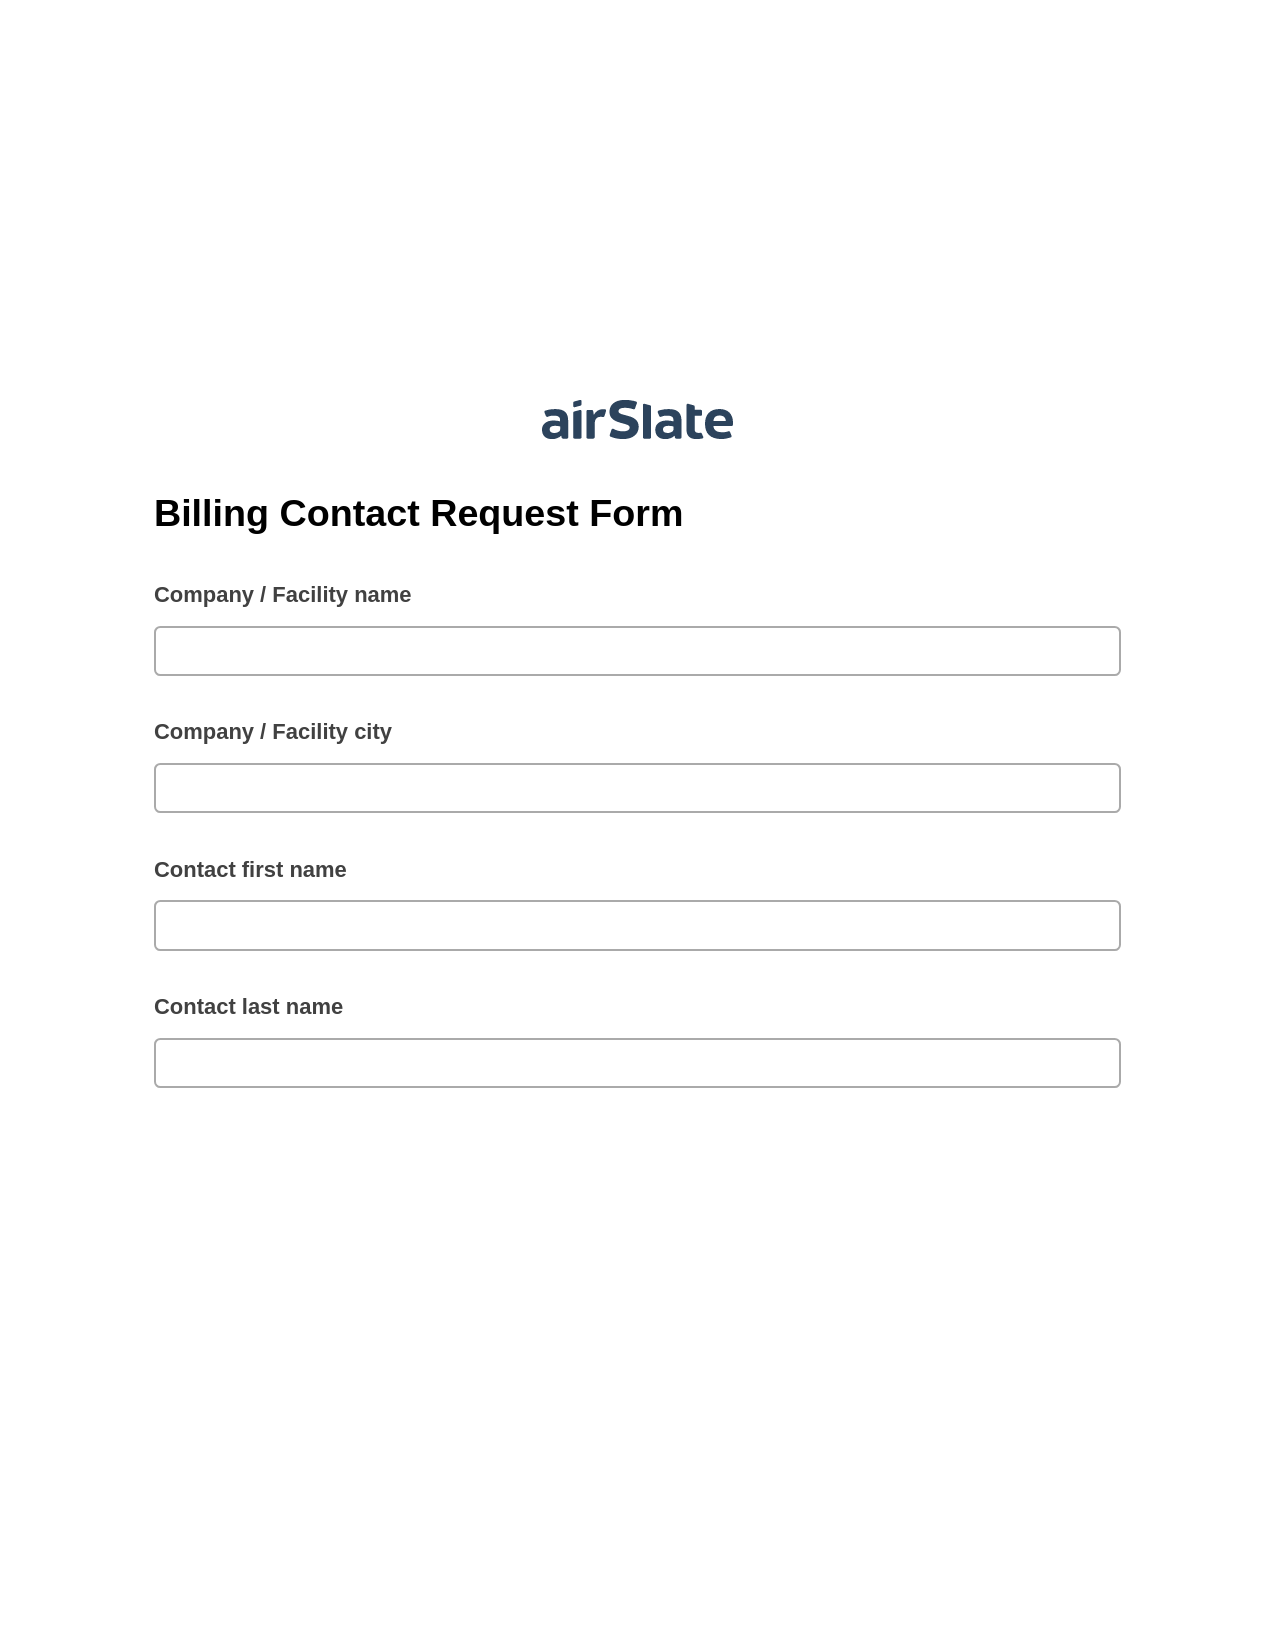 Multirole Billing Contact Request Form Pre-fill Dropdowns from Google Sheet Bot, Google Calendar Bot, Slack Two-Way Binding Bot